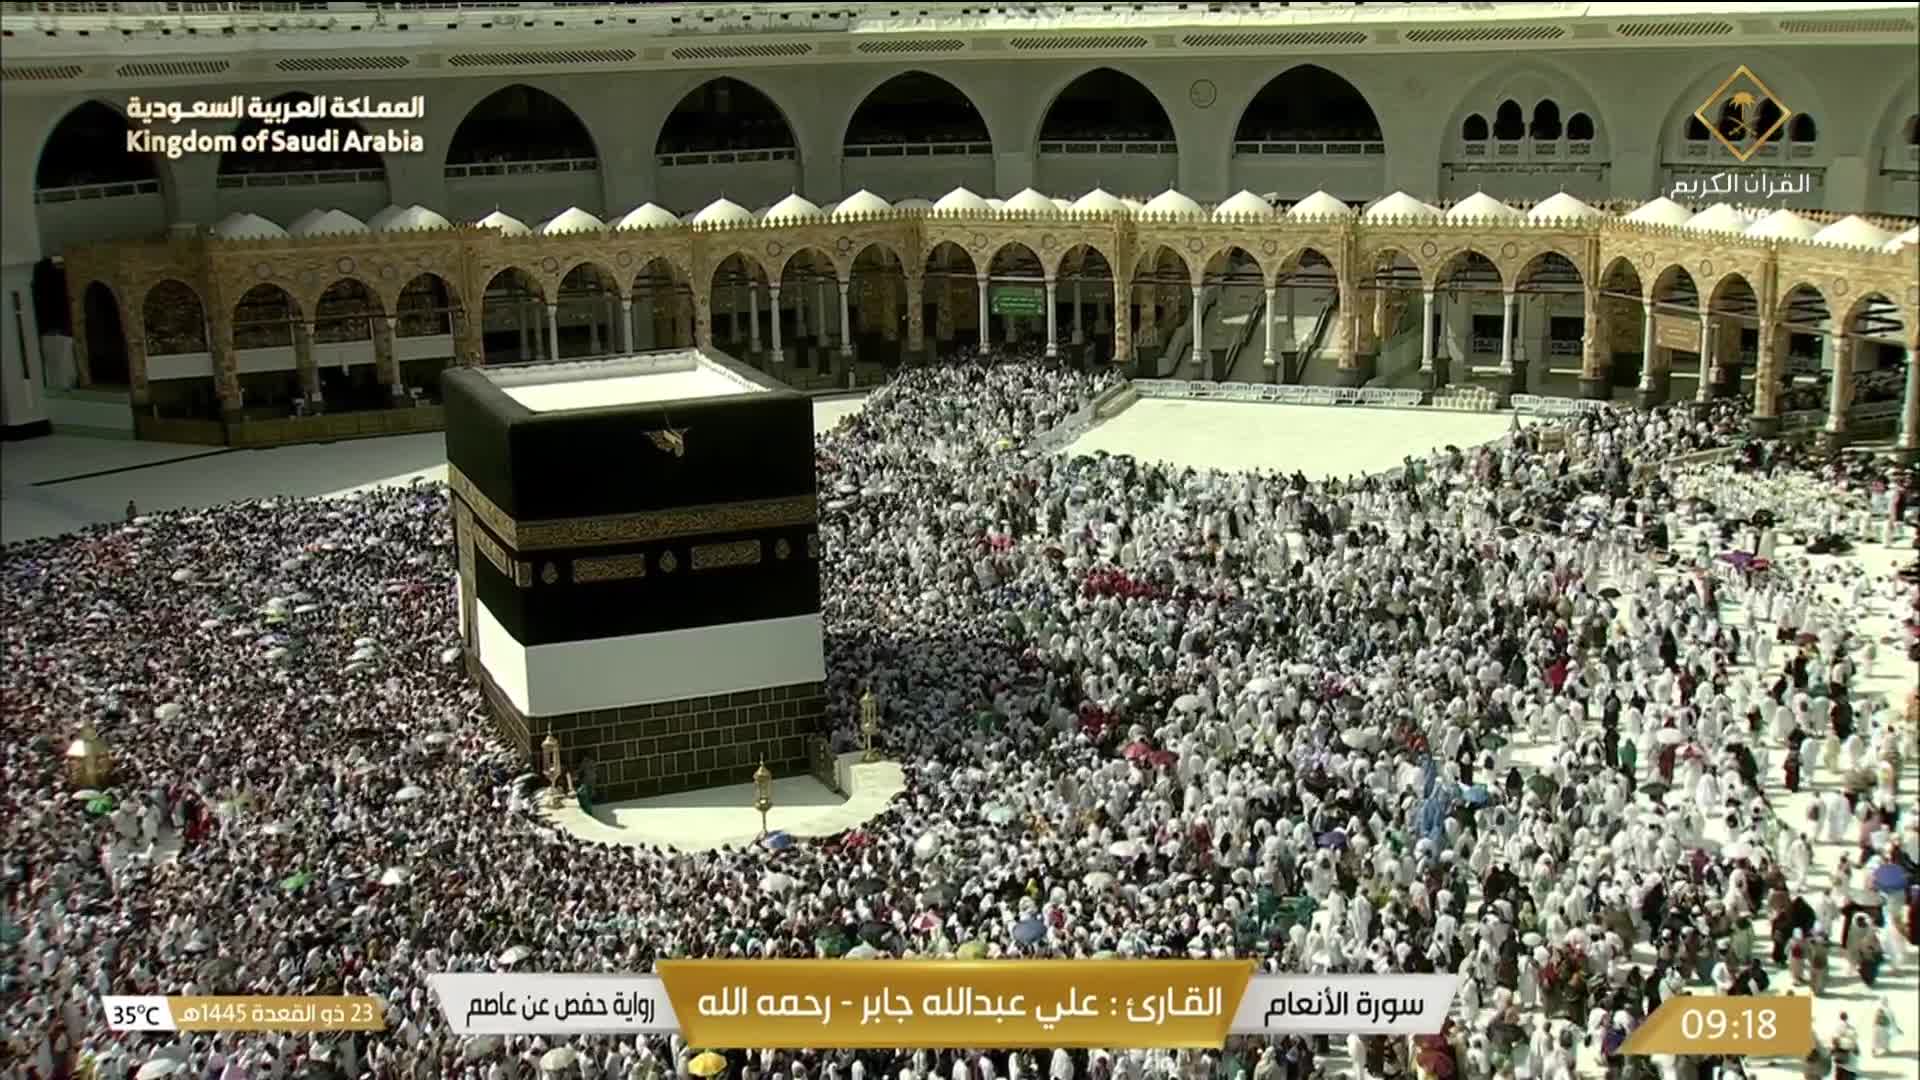 La Mecca Mer. 09:36